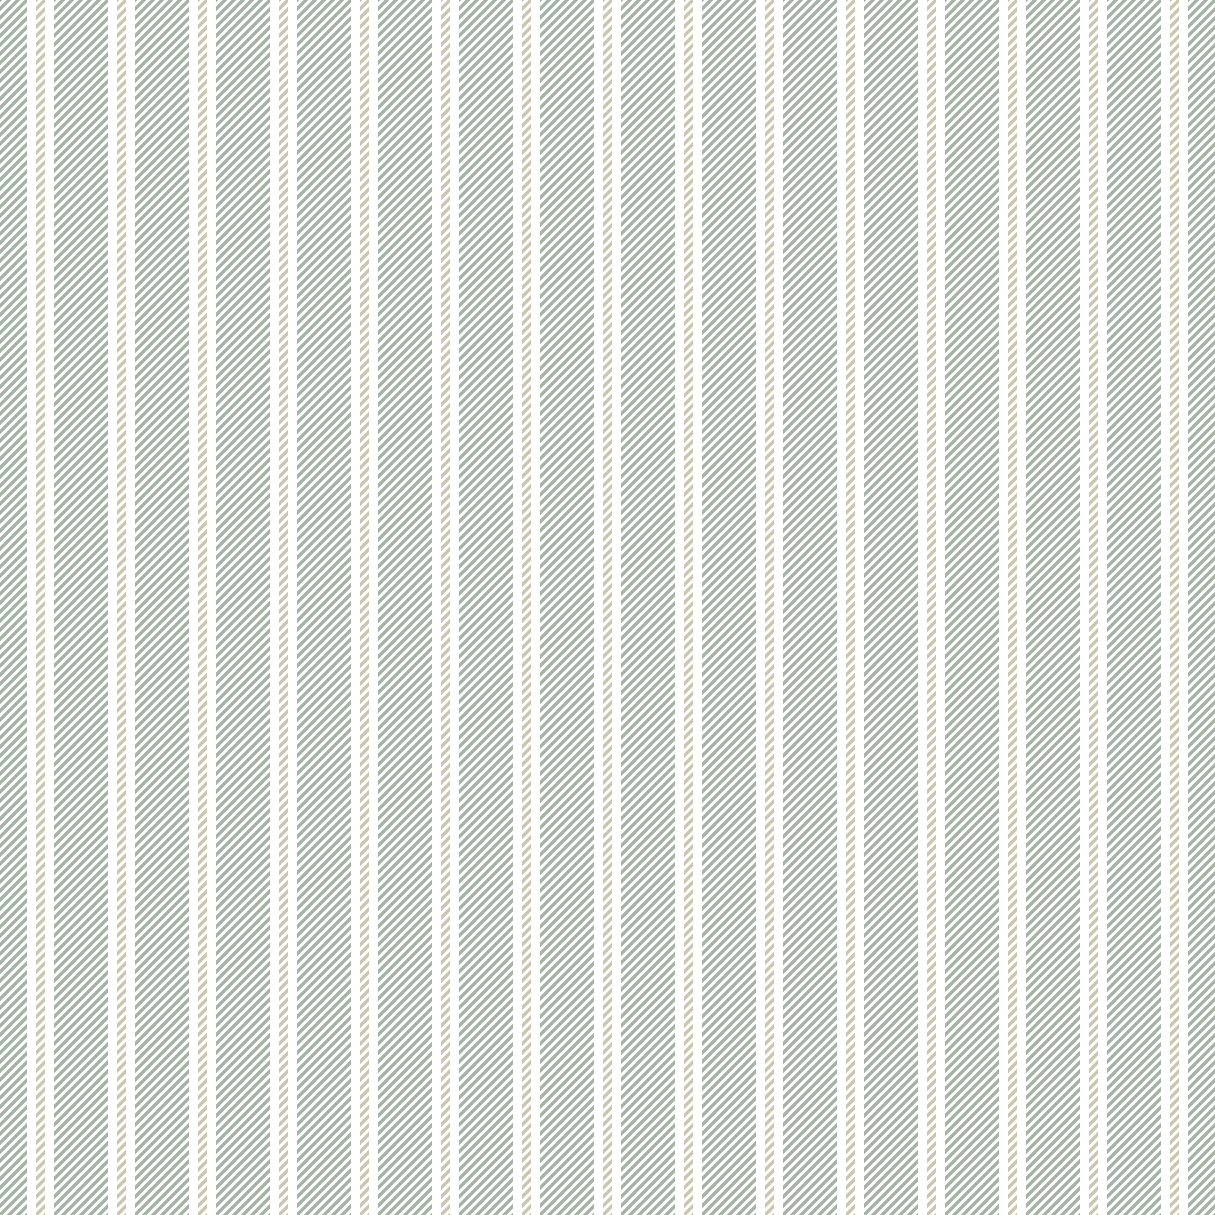 Green & Beige Vertical Stripe Vector Pattern (SVG)